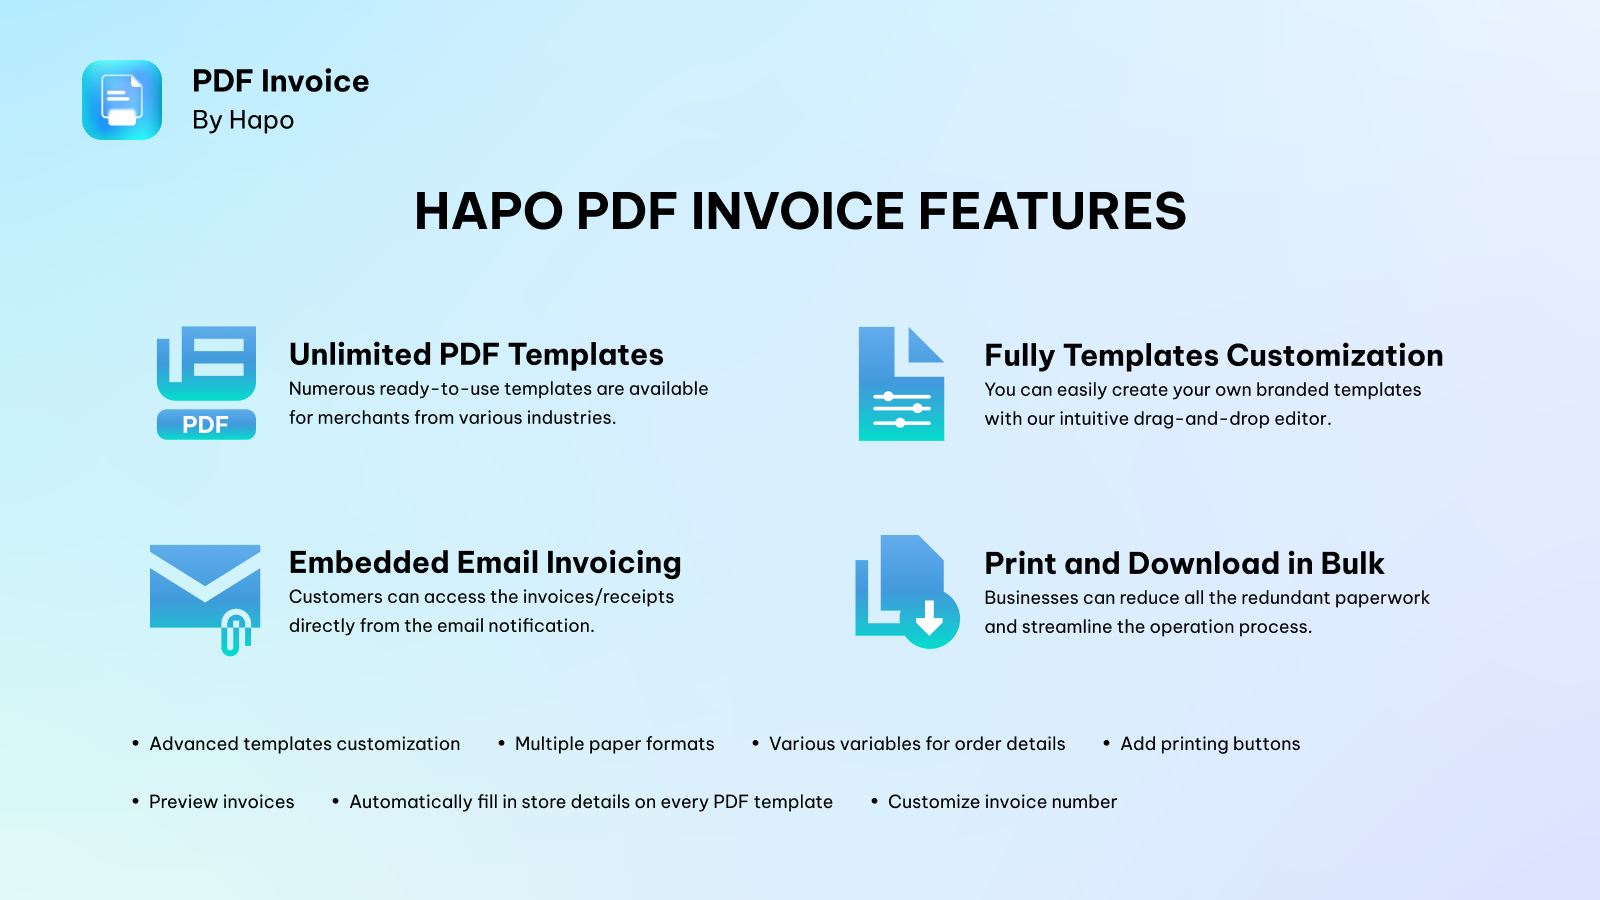 De huvudsakliga funktionerna i HAPO PDF Invoice 